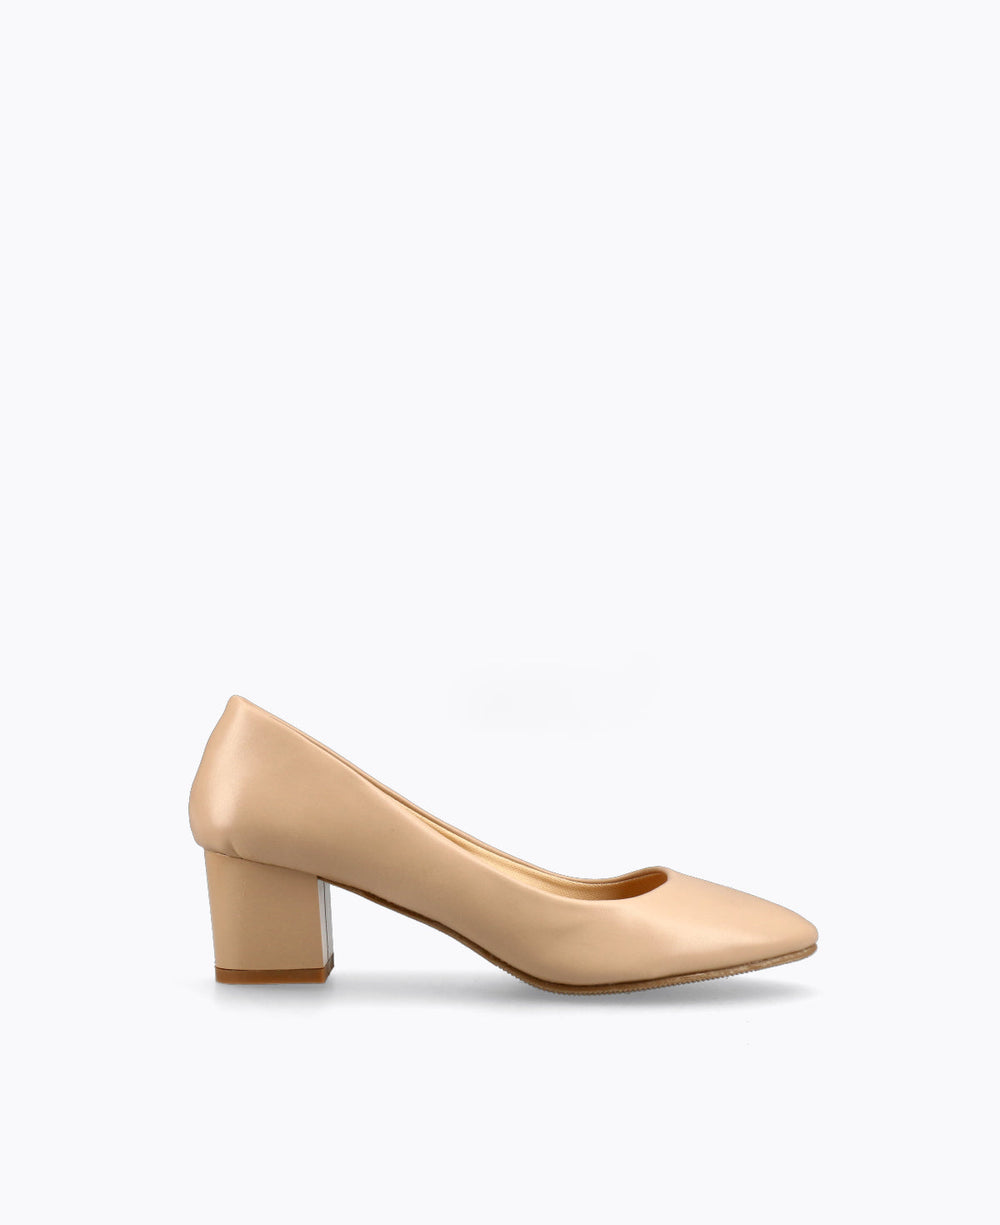 H&M Heeled Platform Sandals | CoolSprings Galleria